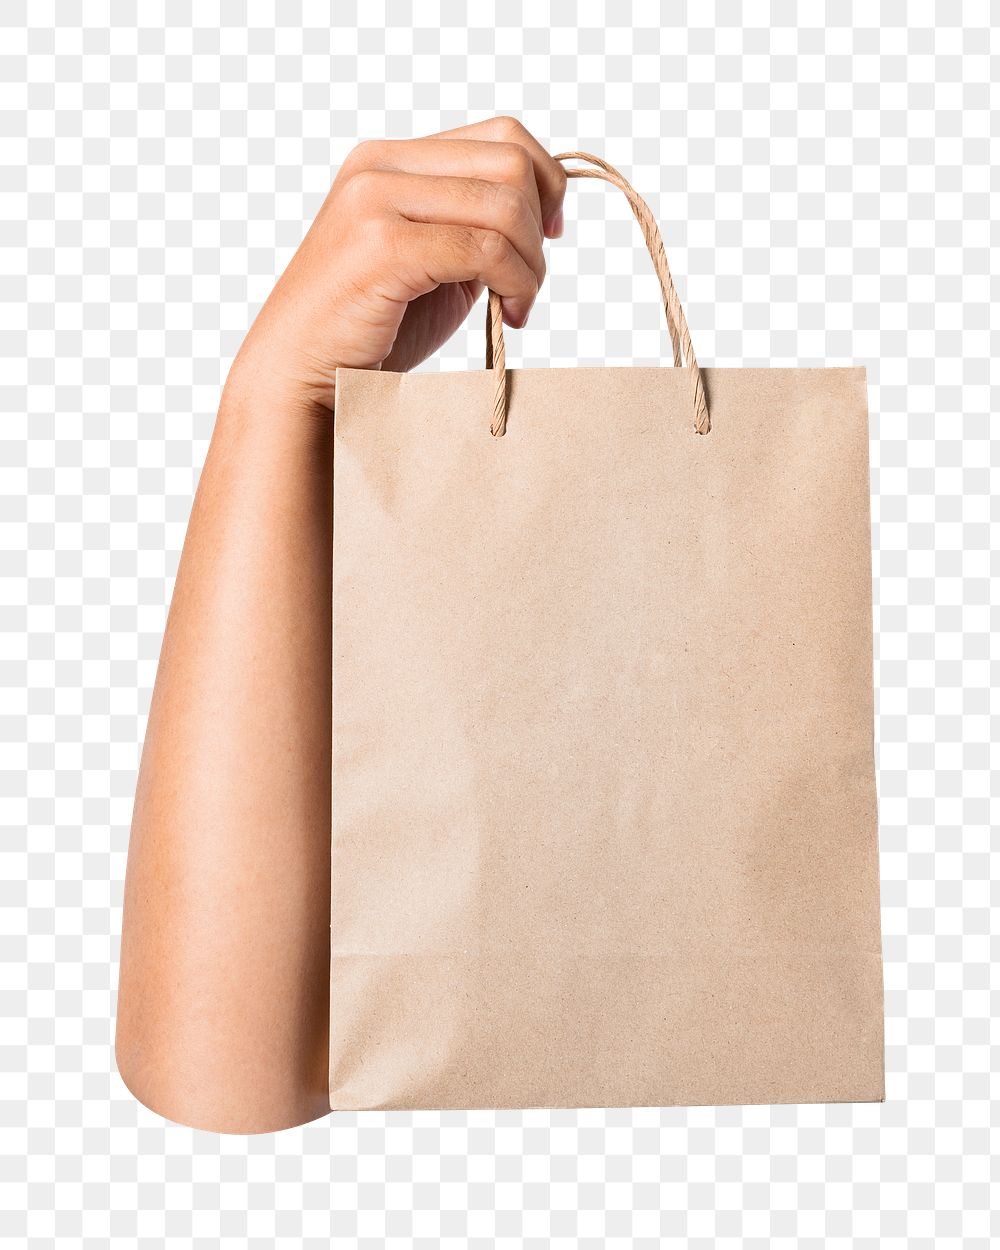 Png hand holding shopping bag, transparent background